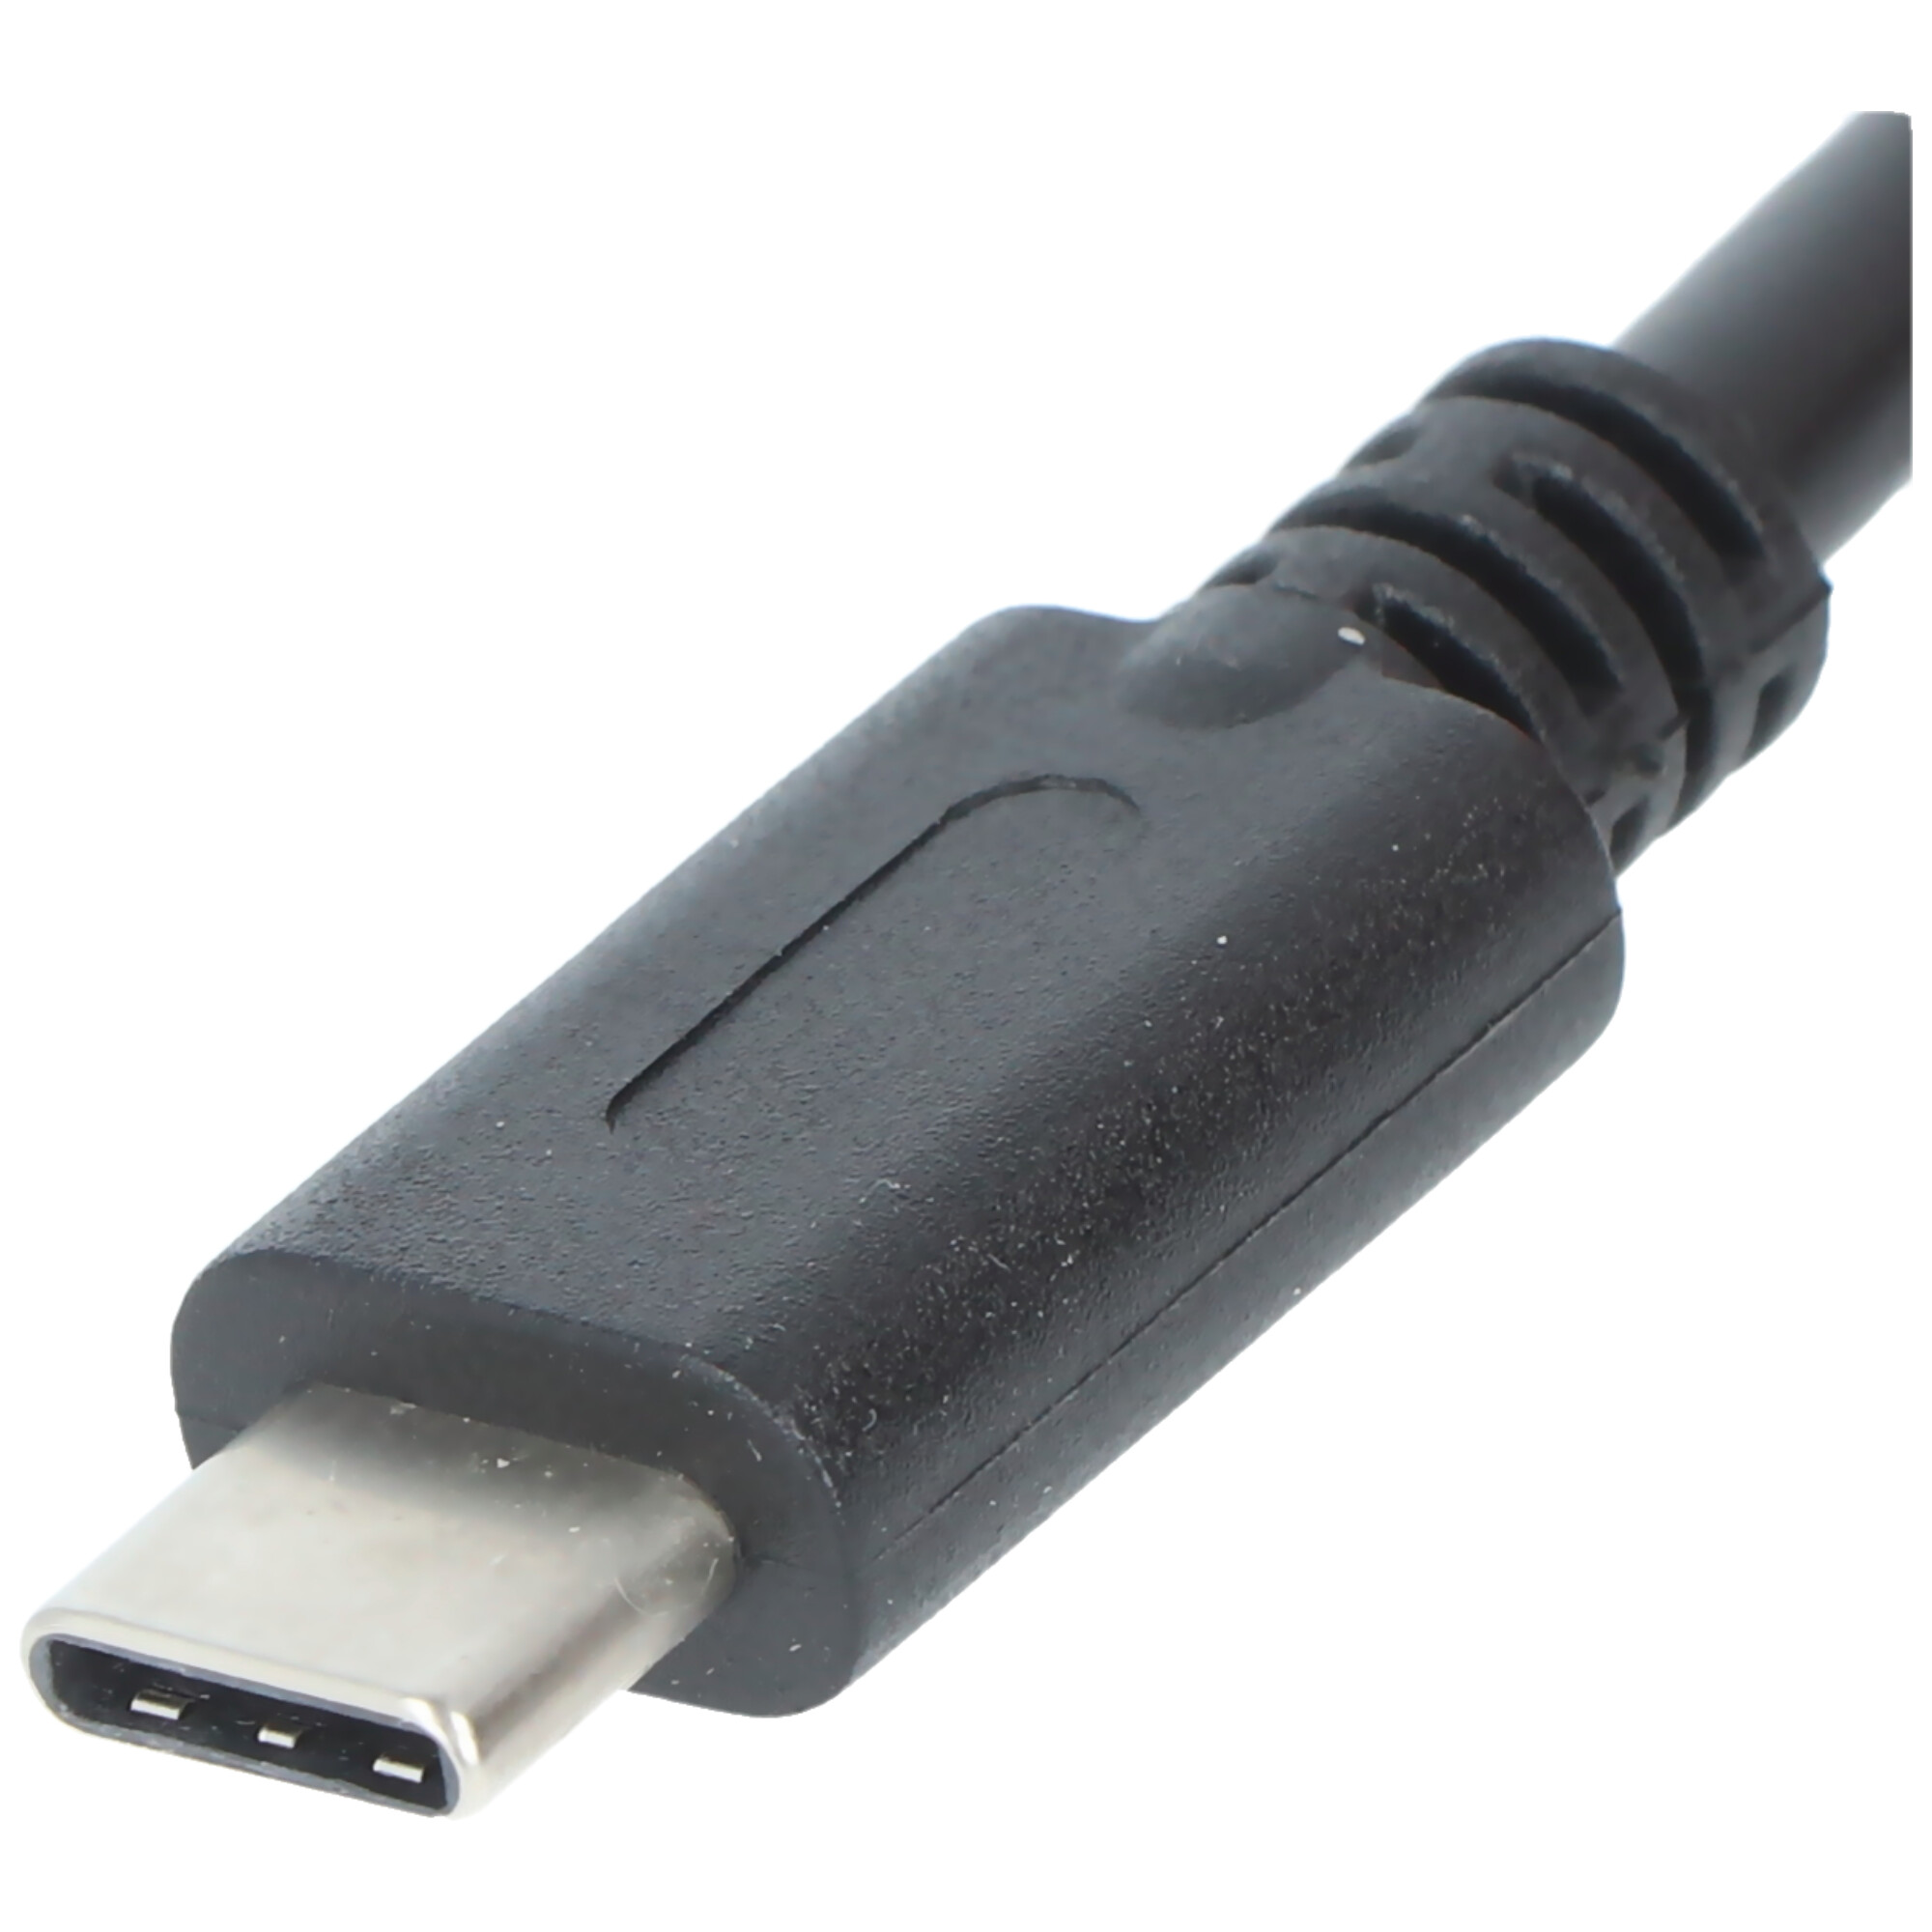 USB-C auf HDMI Adapter USB-C-Stecker  HDMI-Buchse